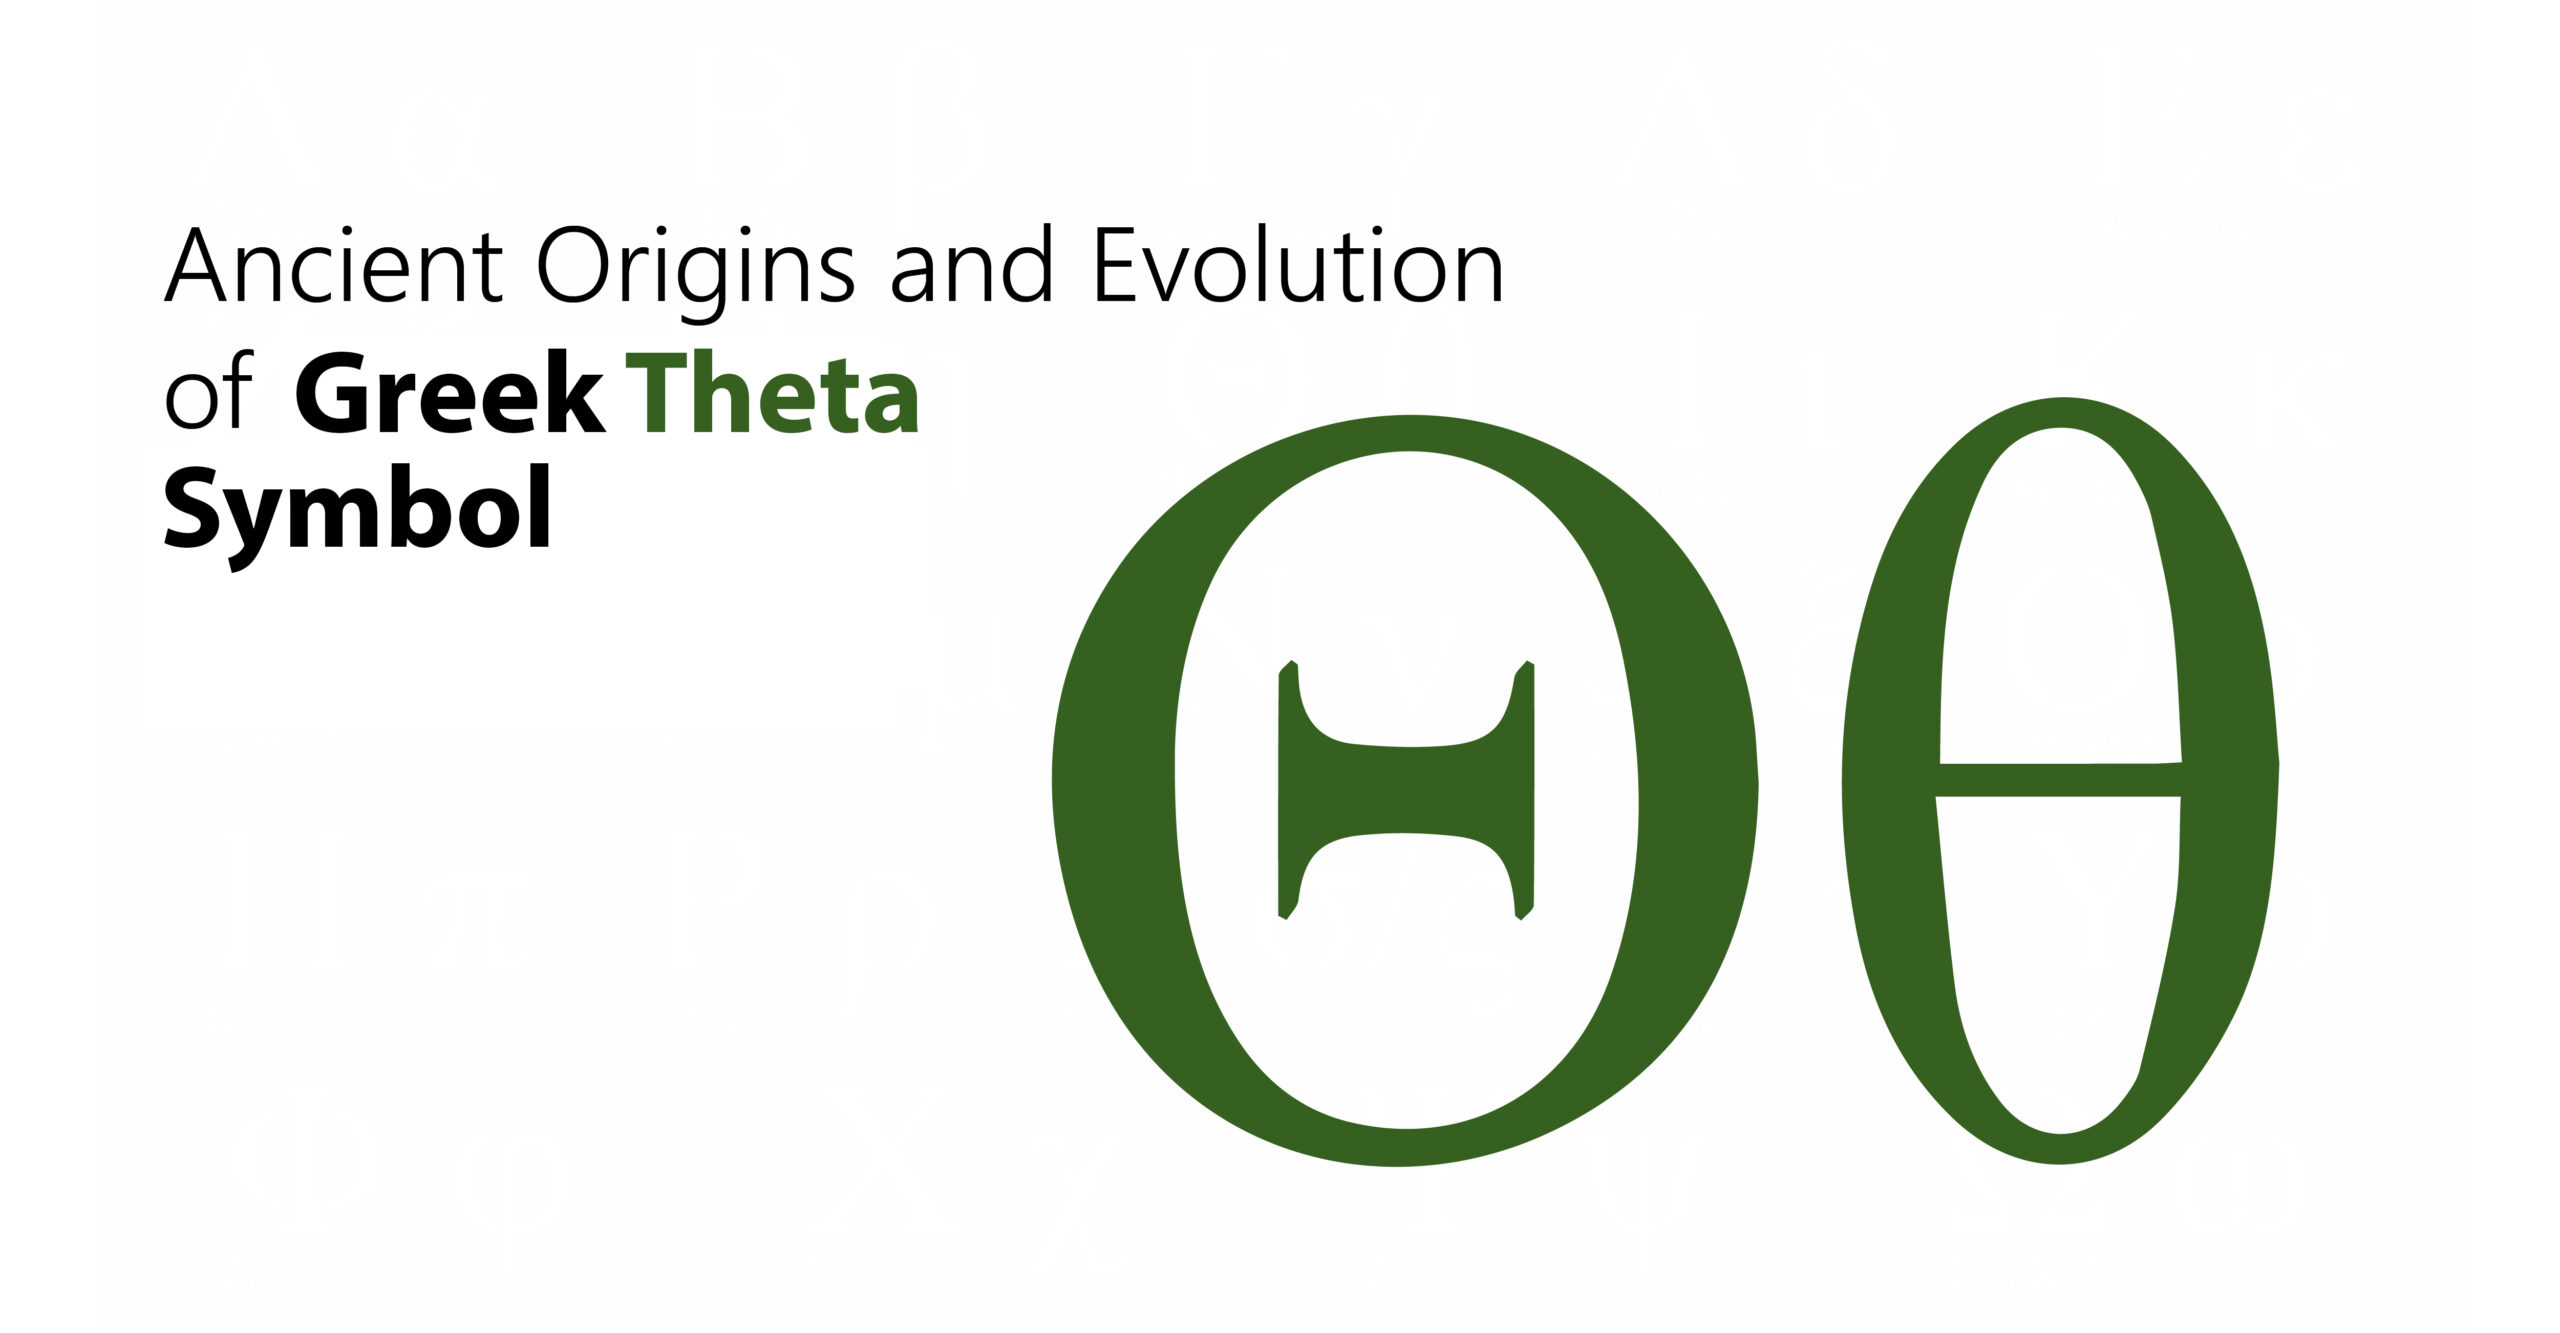 Ancient Origins and Evolution of the Greek Theta Symbol